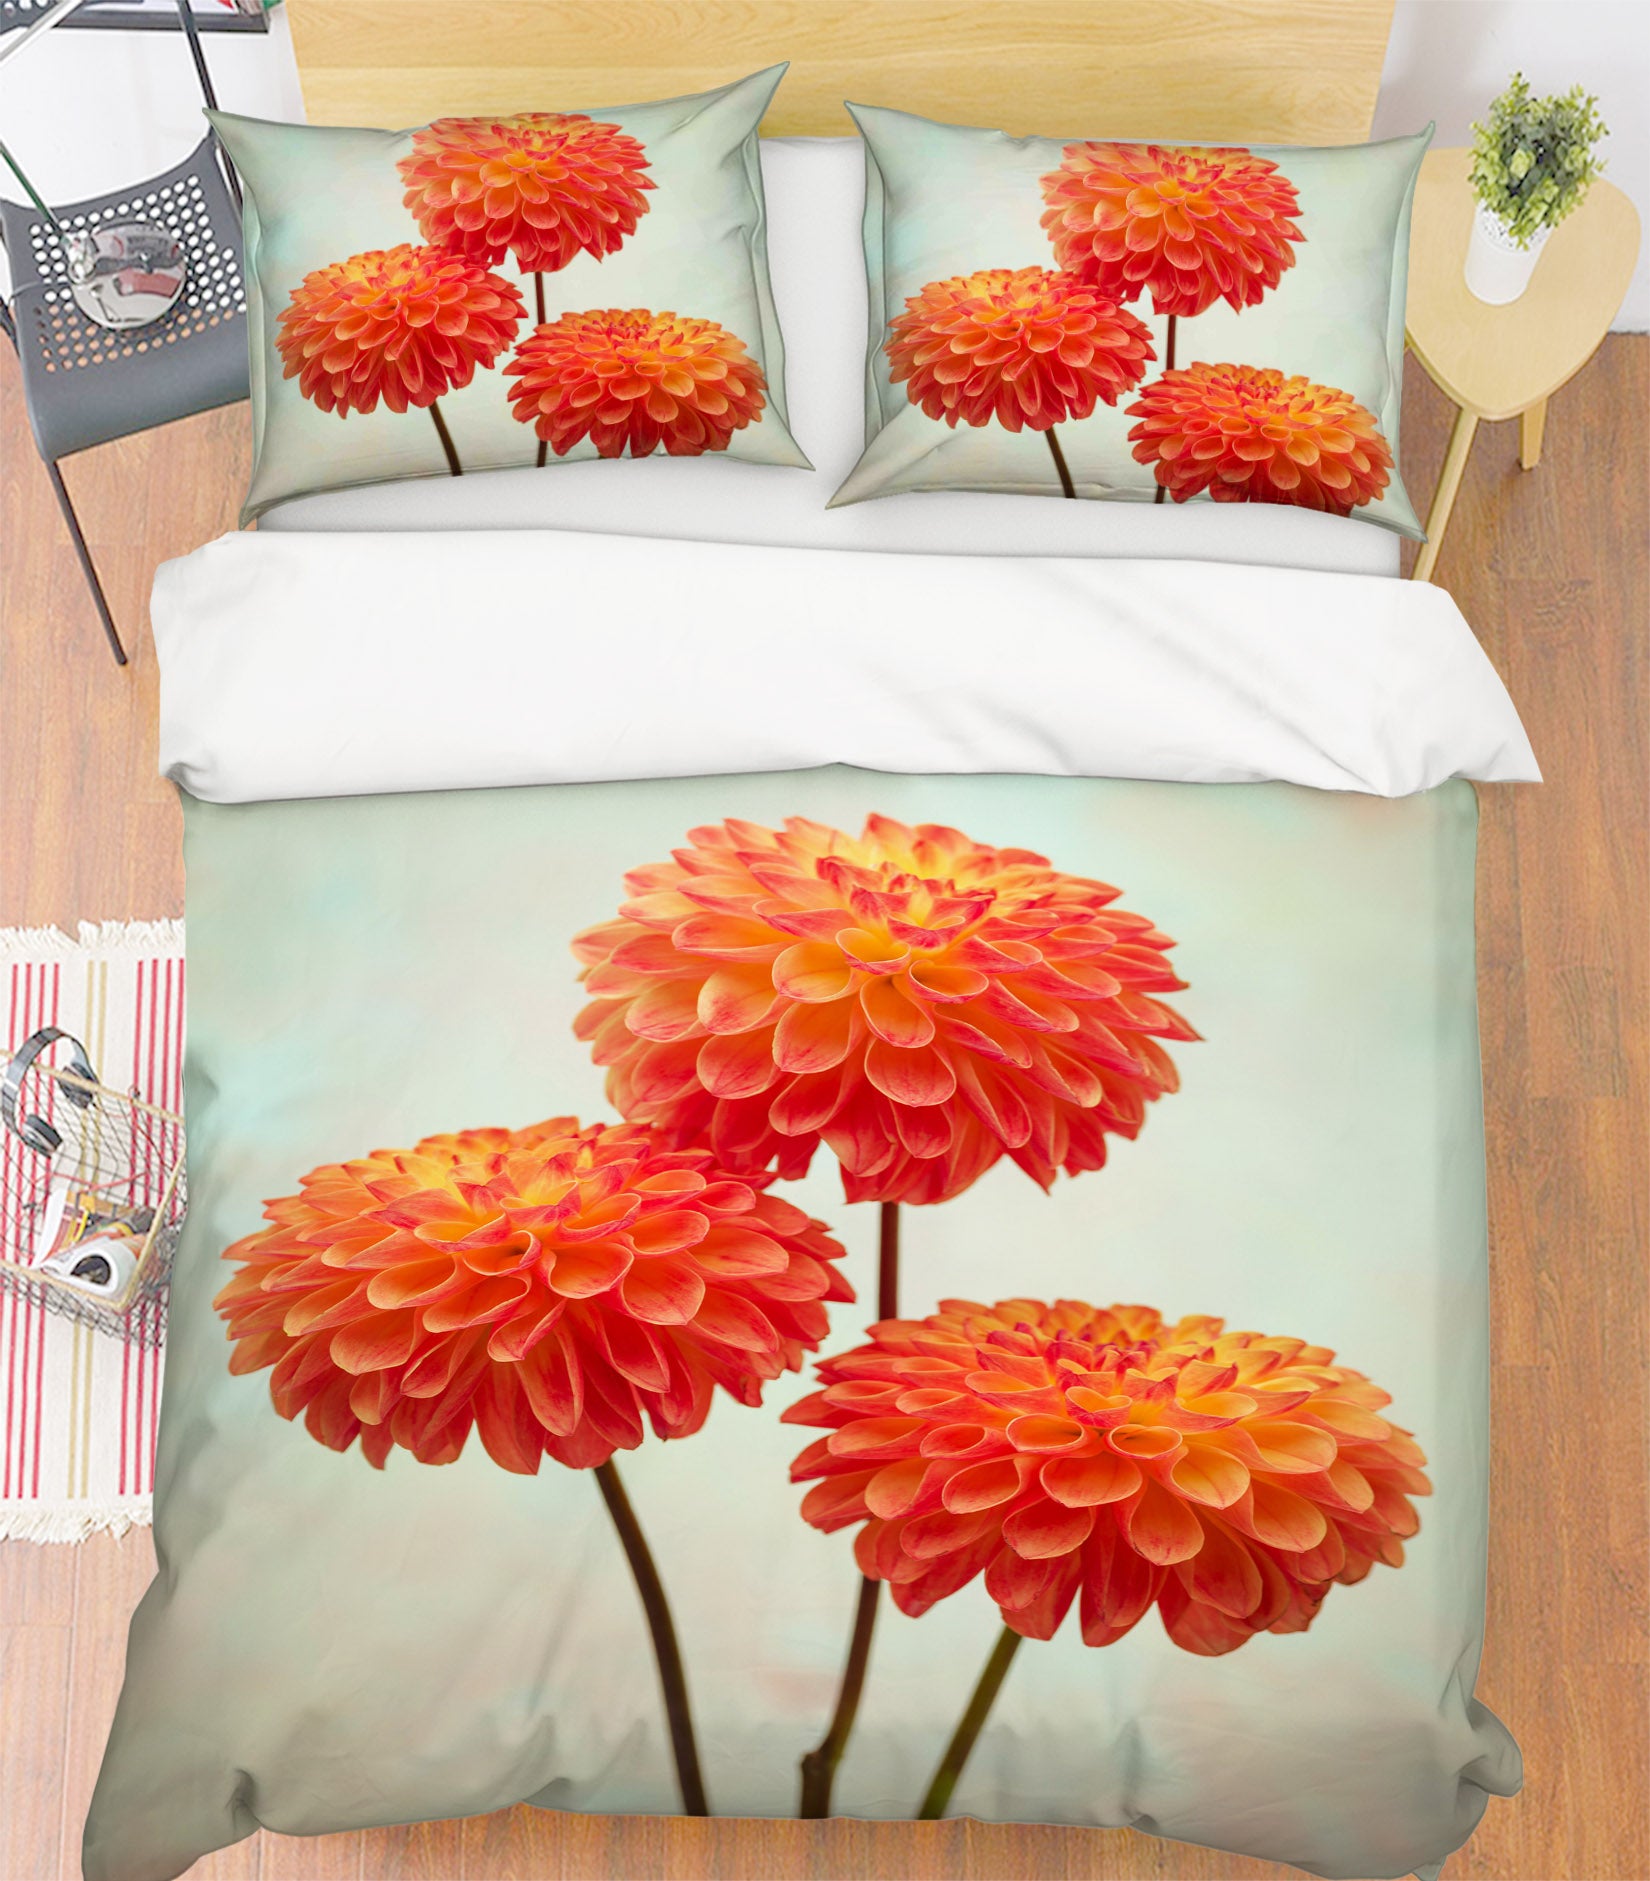 3D Red Flowers 85107 Assaf Frank Bedding Bed Pillowcases Quilt